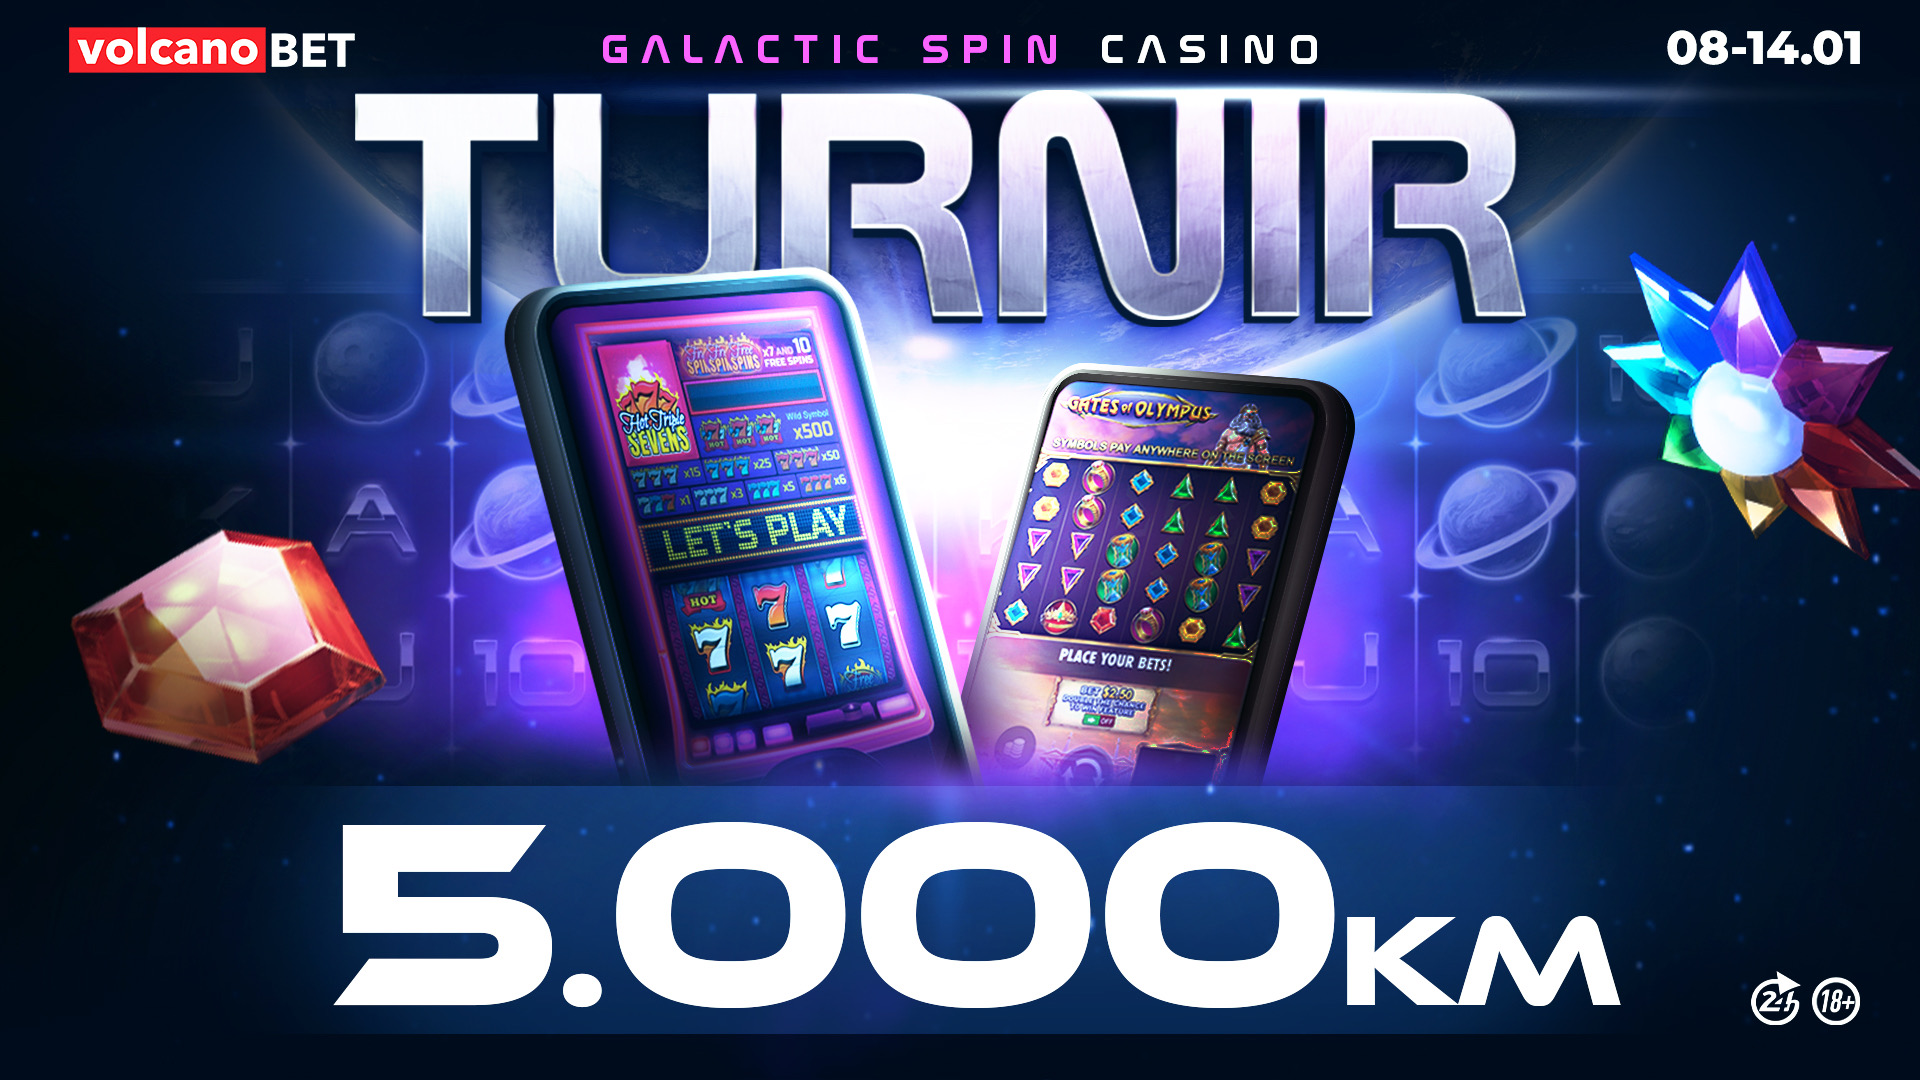 Casino Galactic Spin Turnir